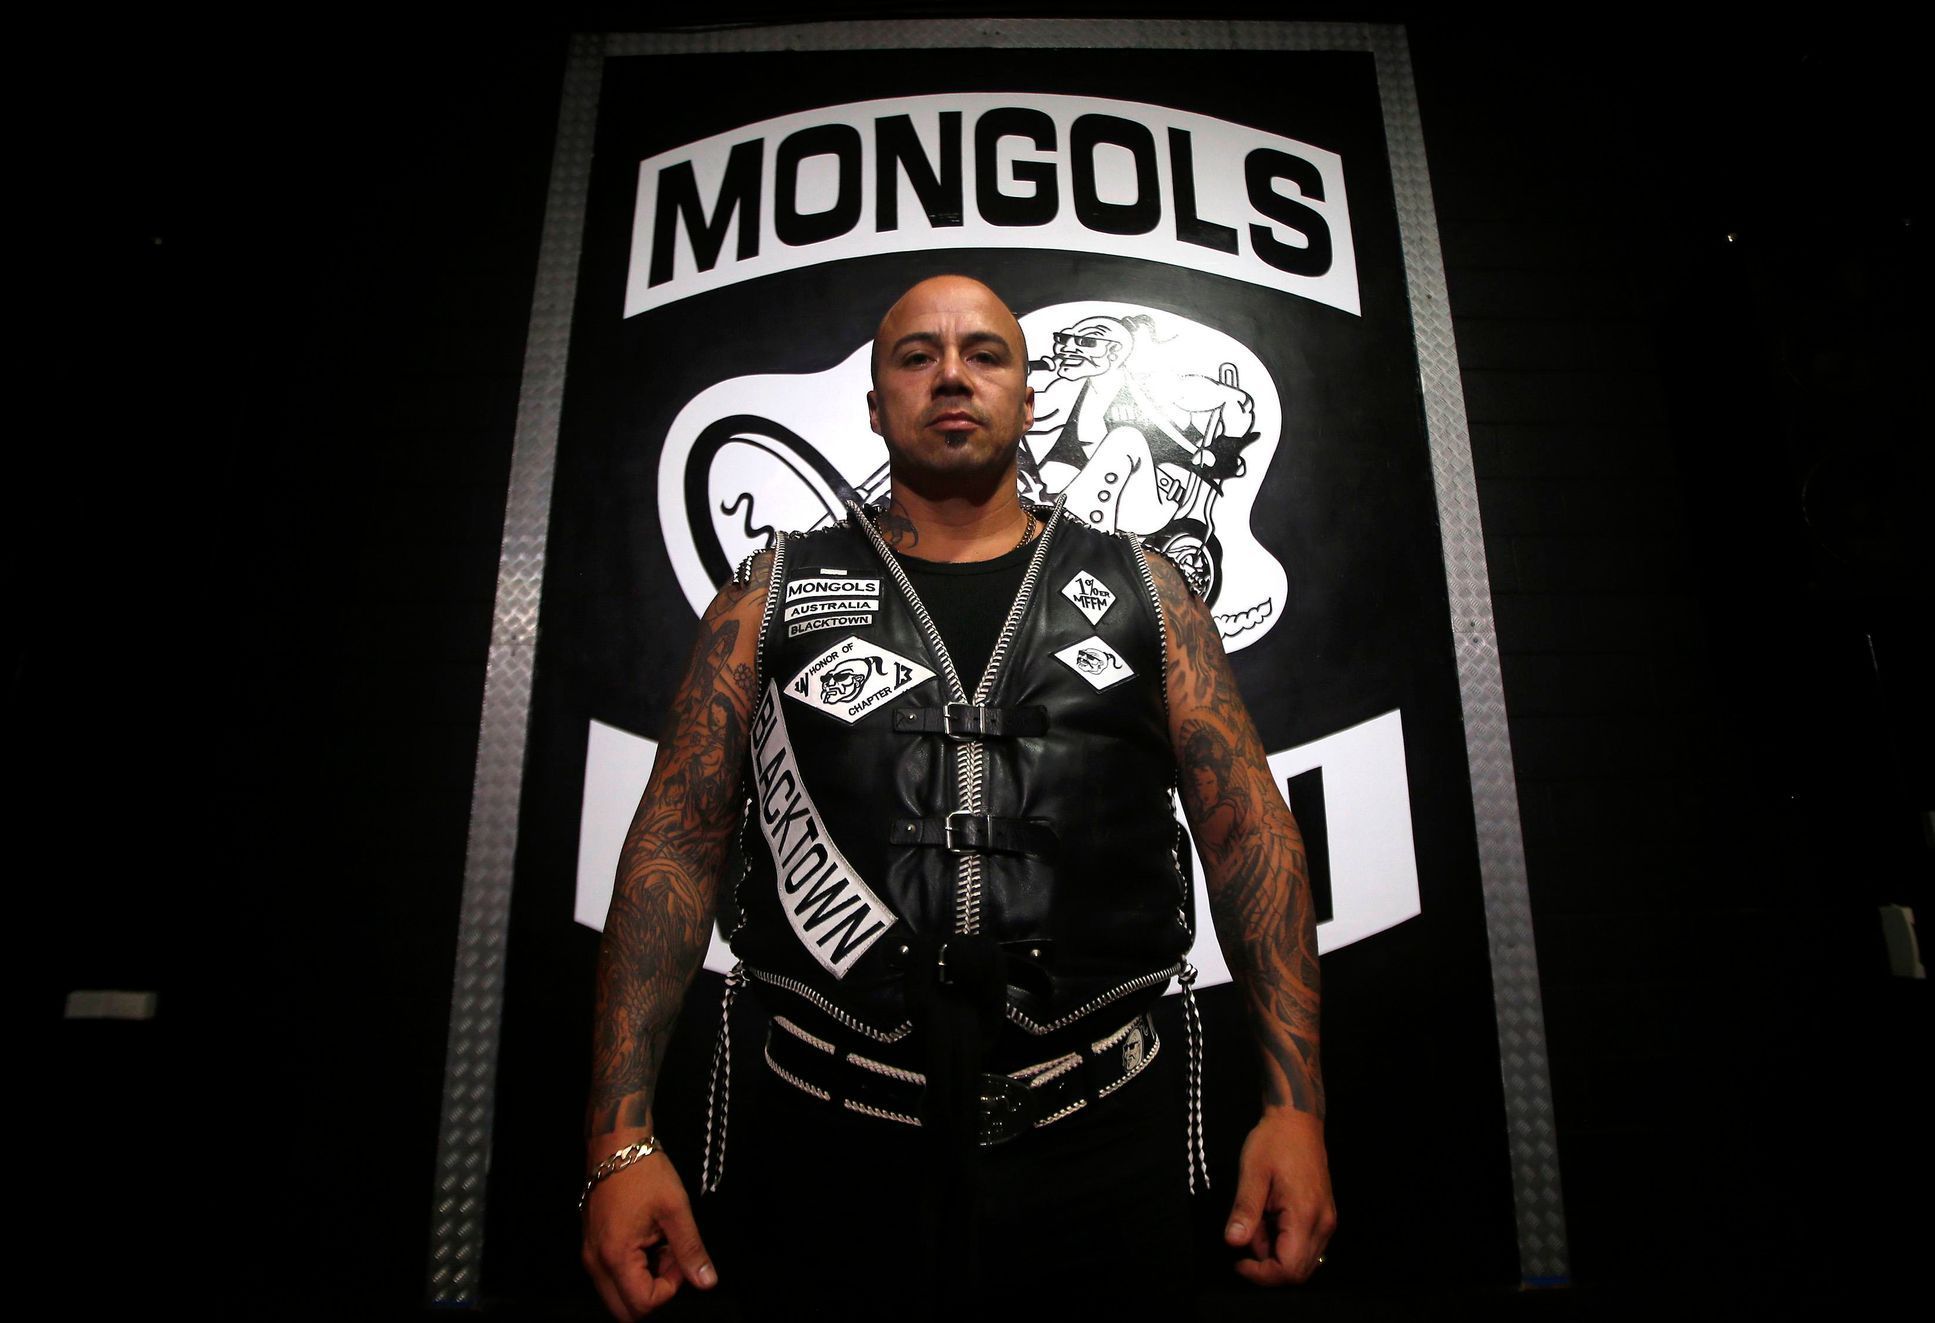 Mongols Motorcycle Club - 'Pablo'